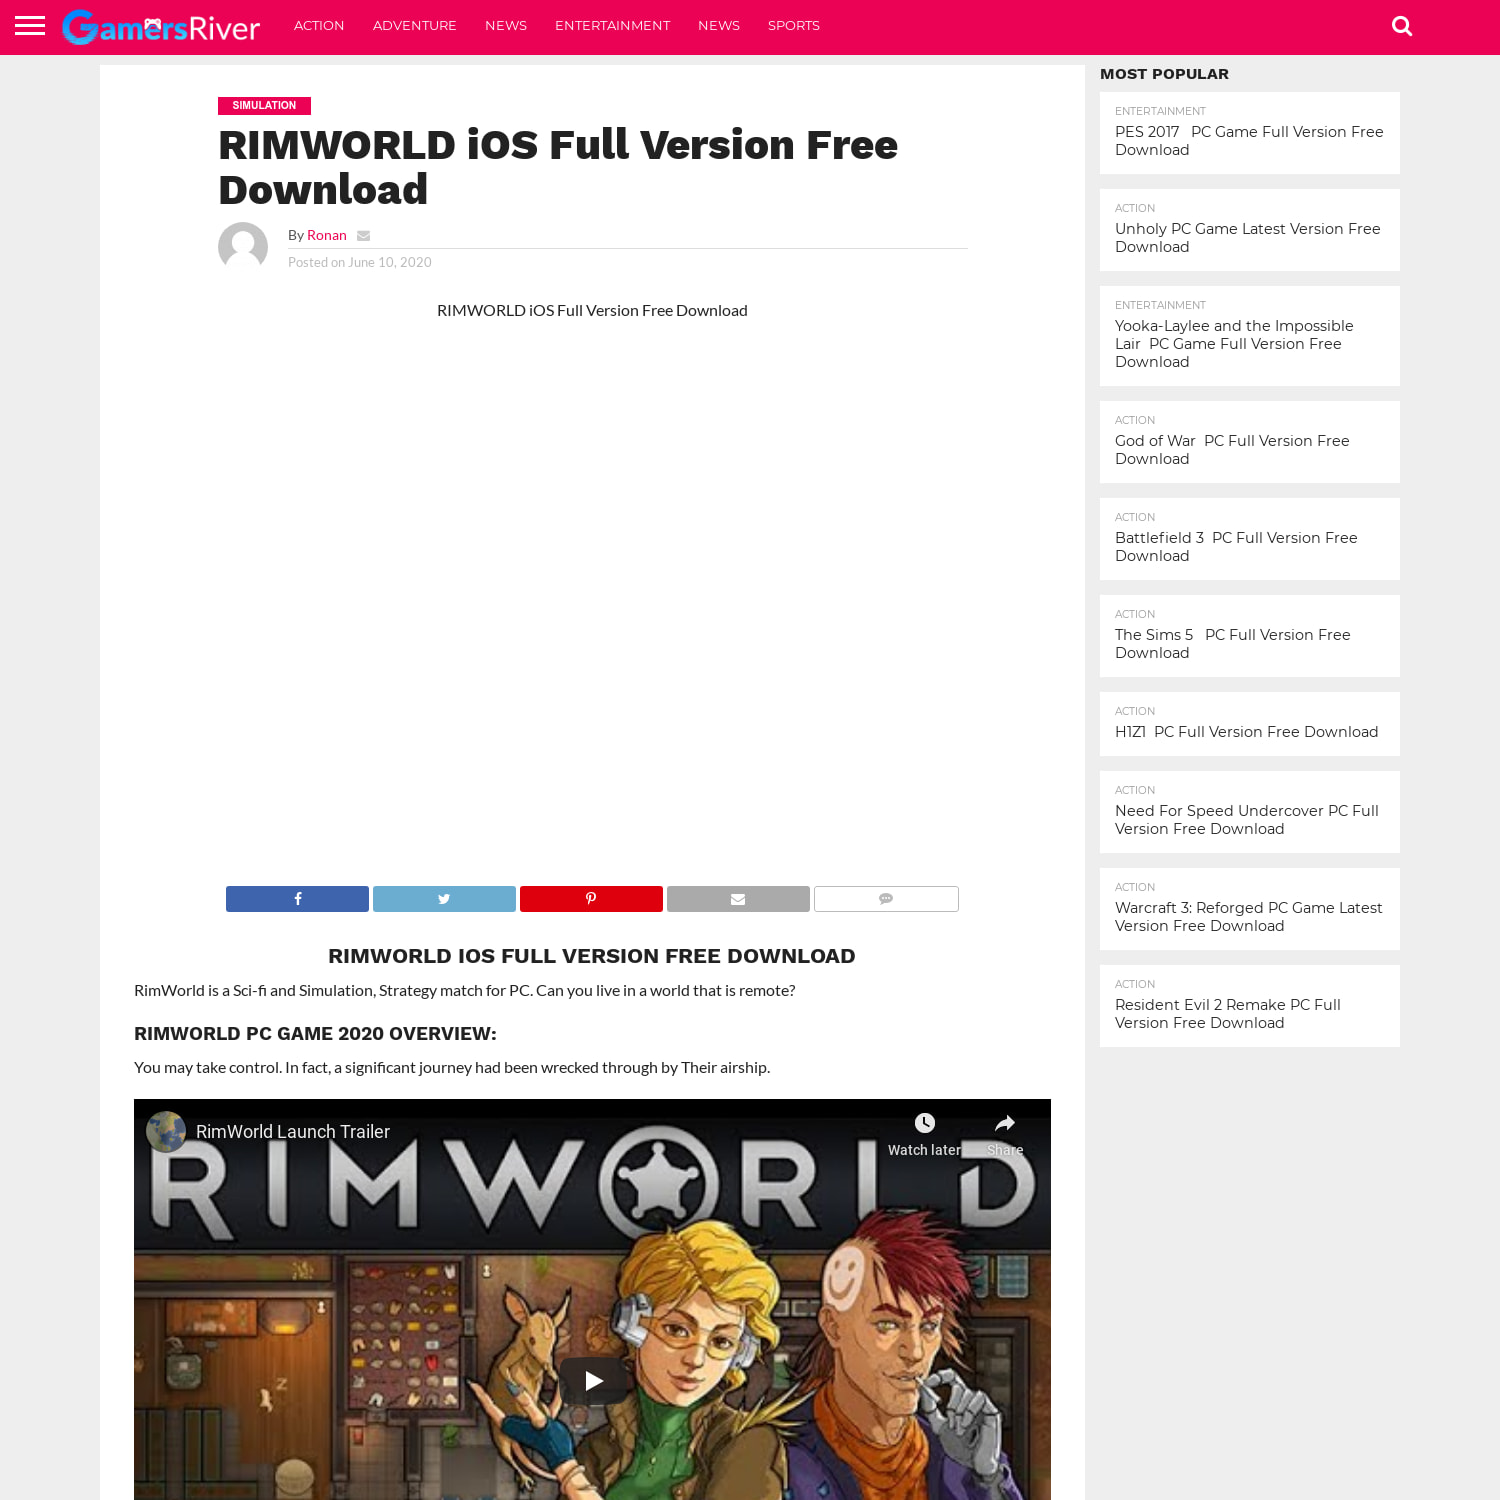 RIMWORLD iOS Full Version Free Download